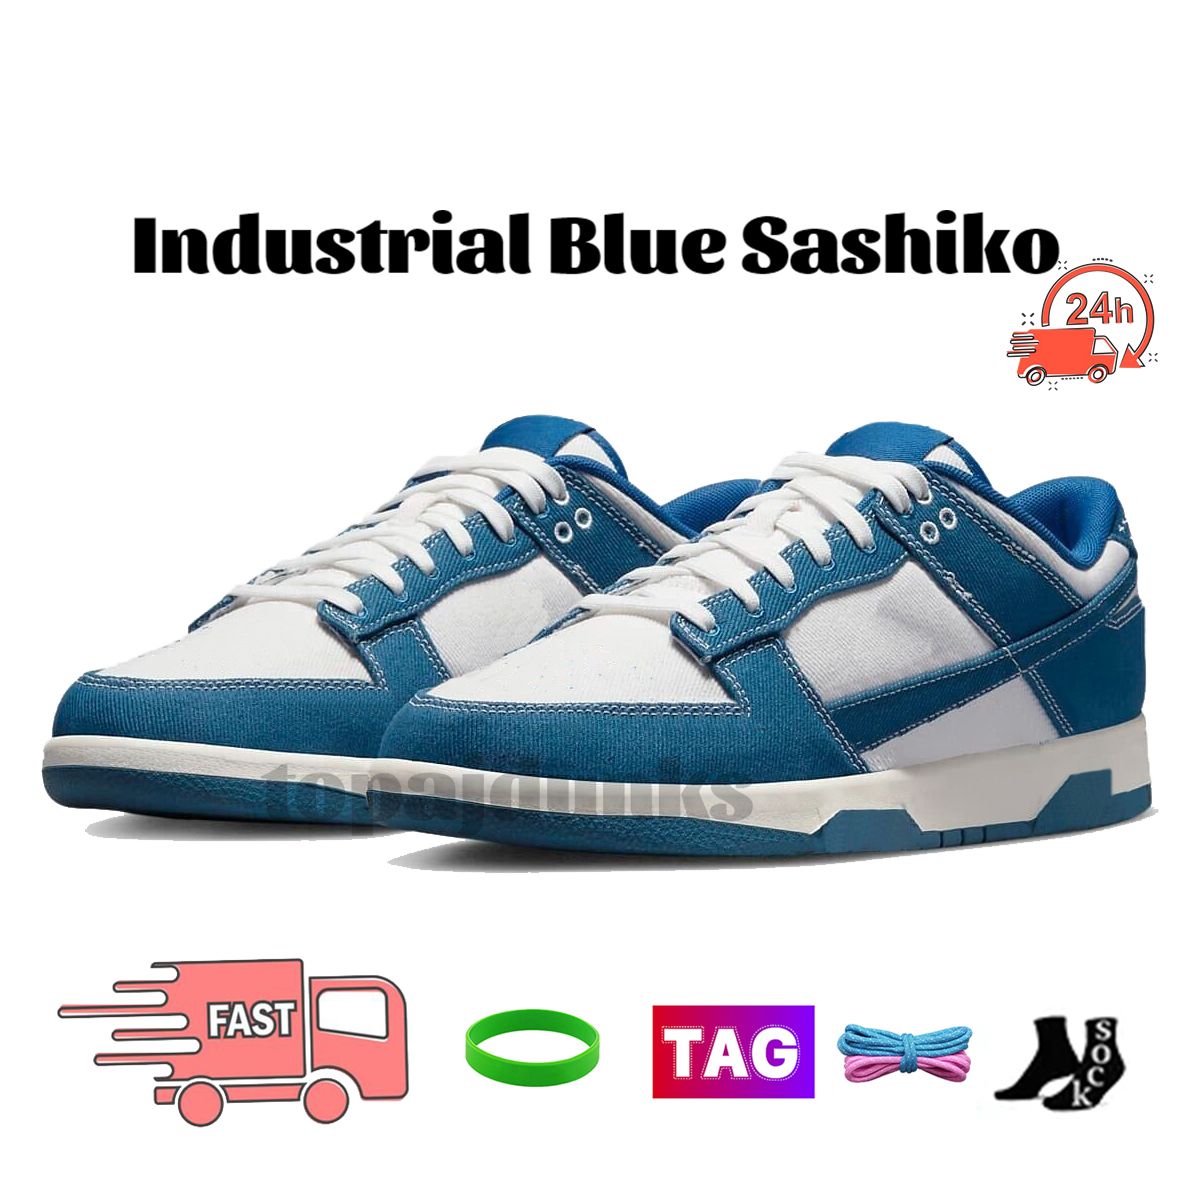 23 Industrial Blue Sashiko